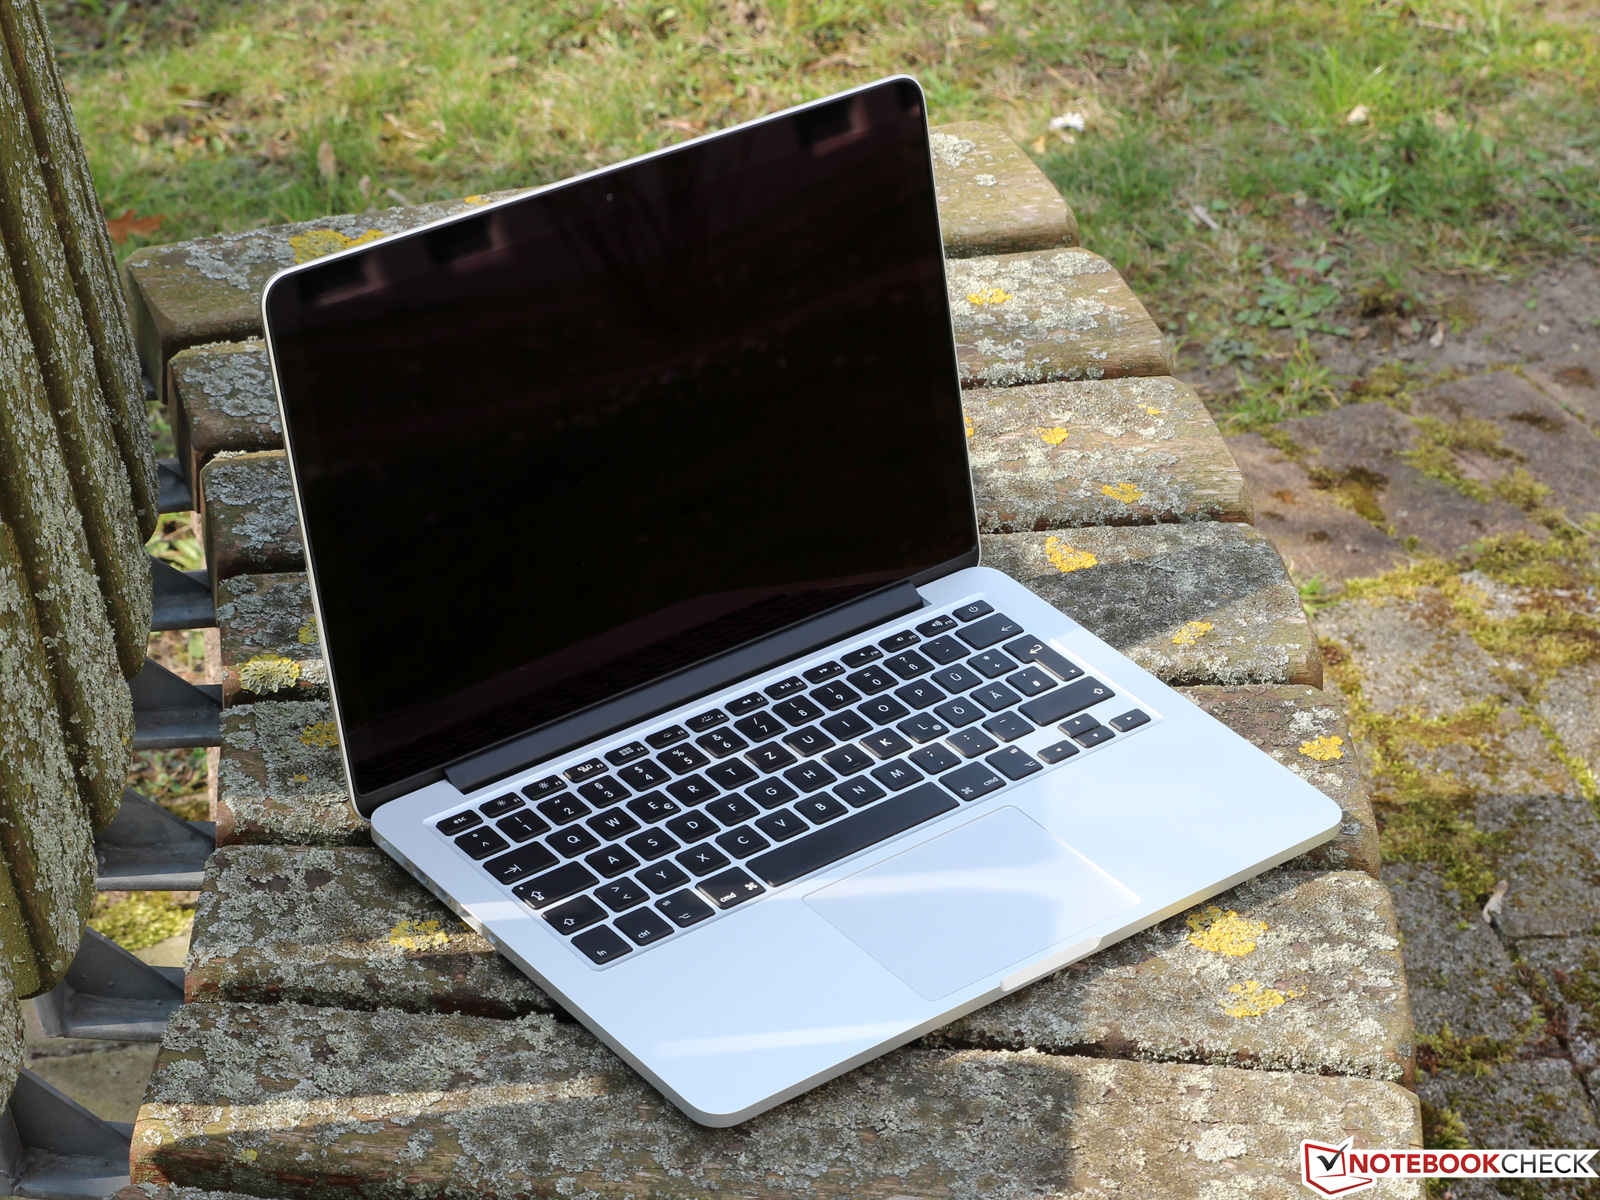 macbook pro 13 inch mid 2012 ram 1866 mhz